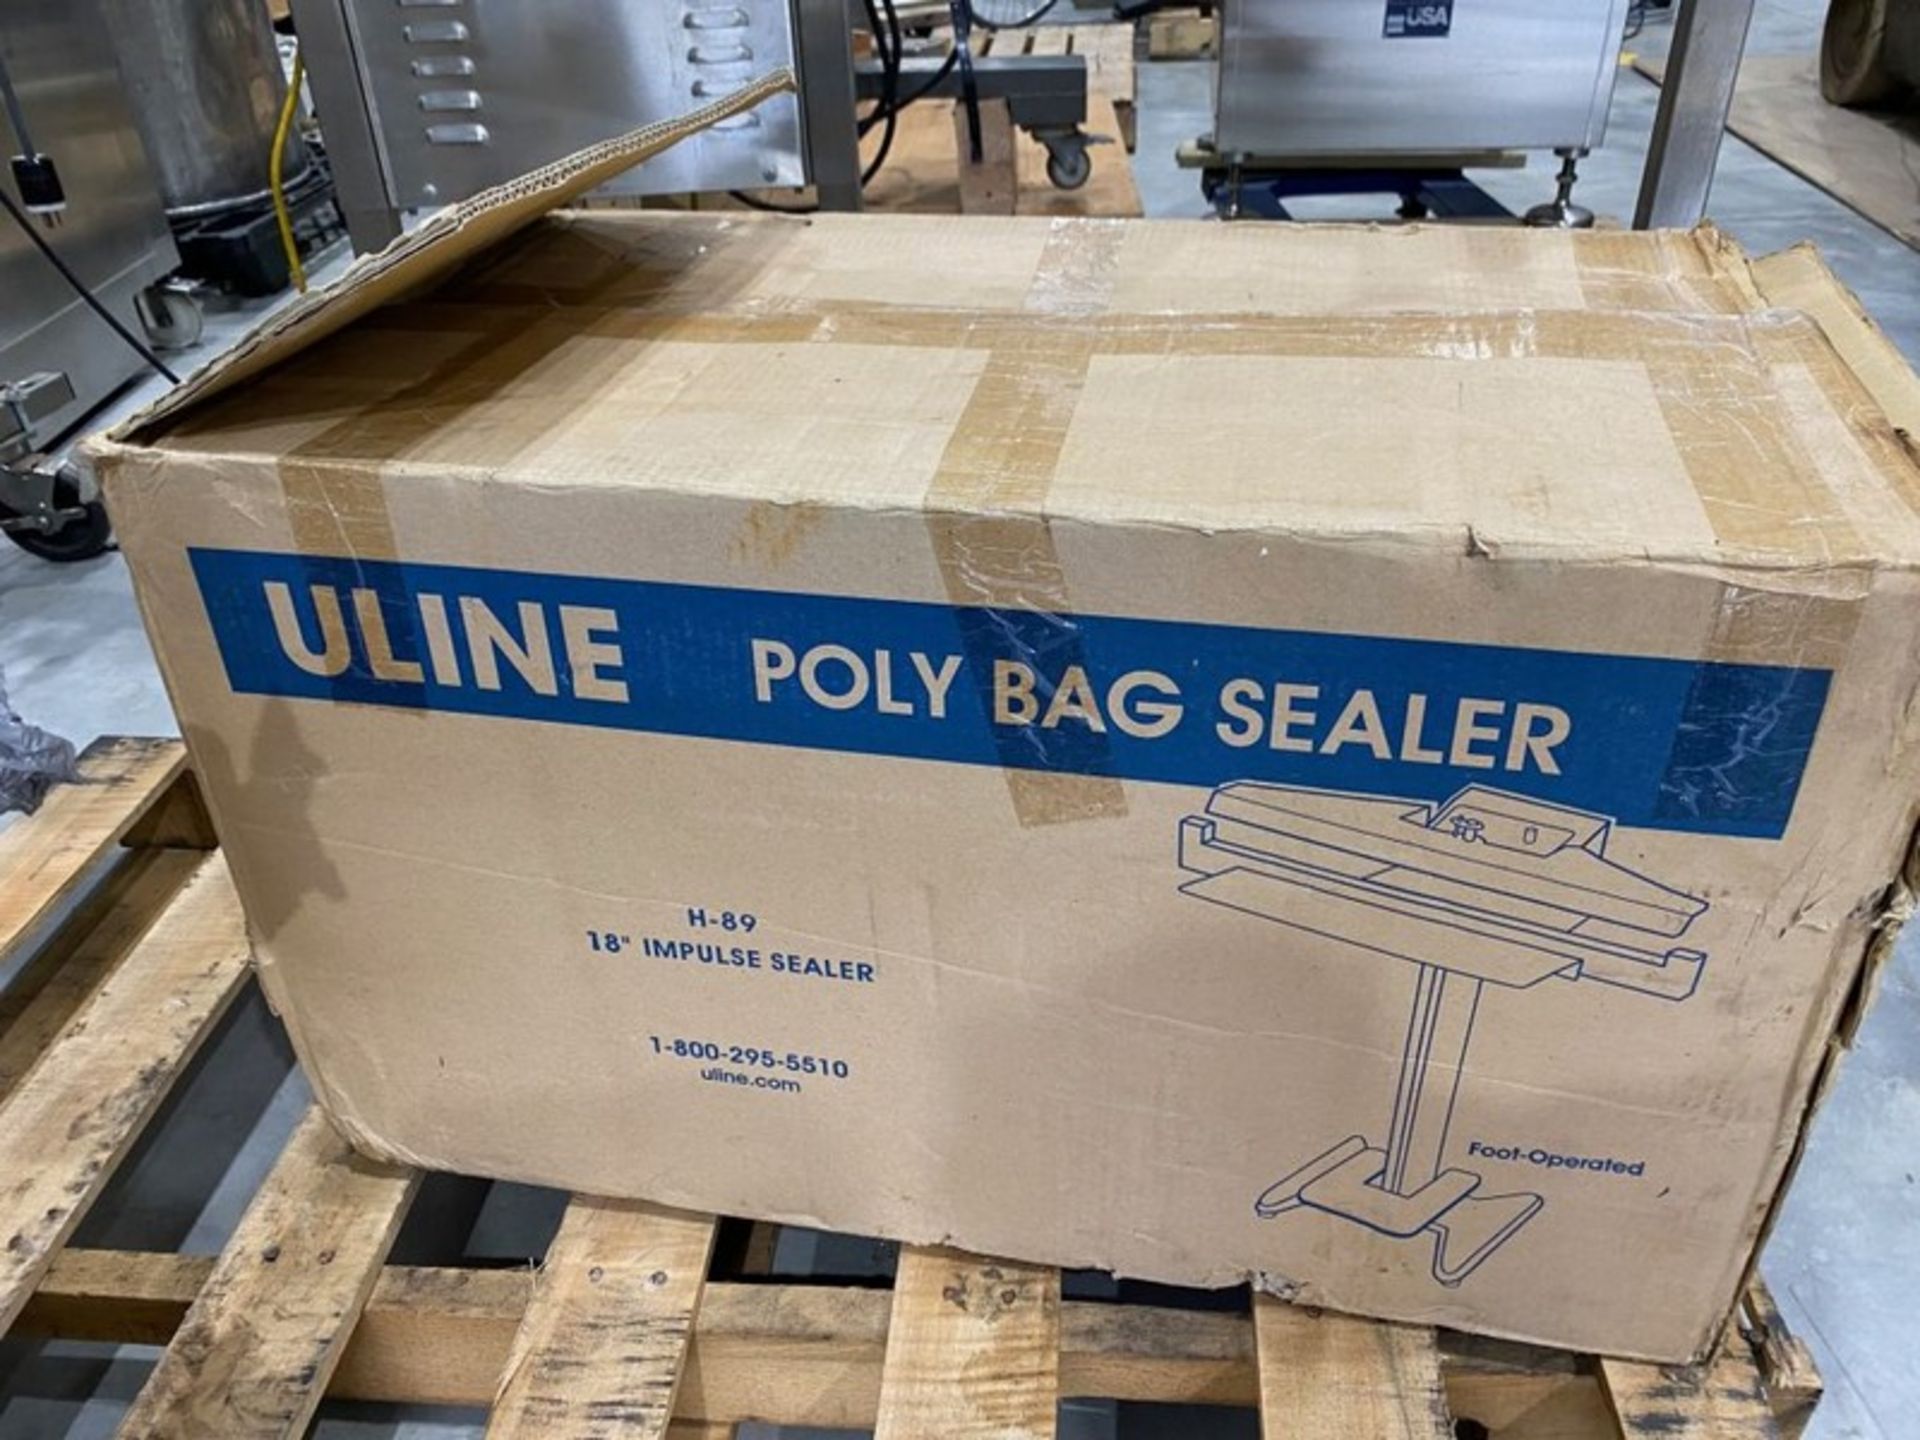 Uline Impulse Sealer, Model: H-89, 18" Sealer Head. Unit appears unused, as shown in photos. No